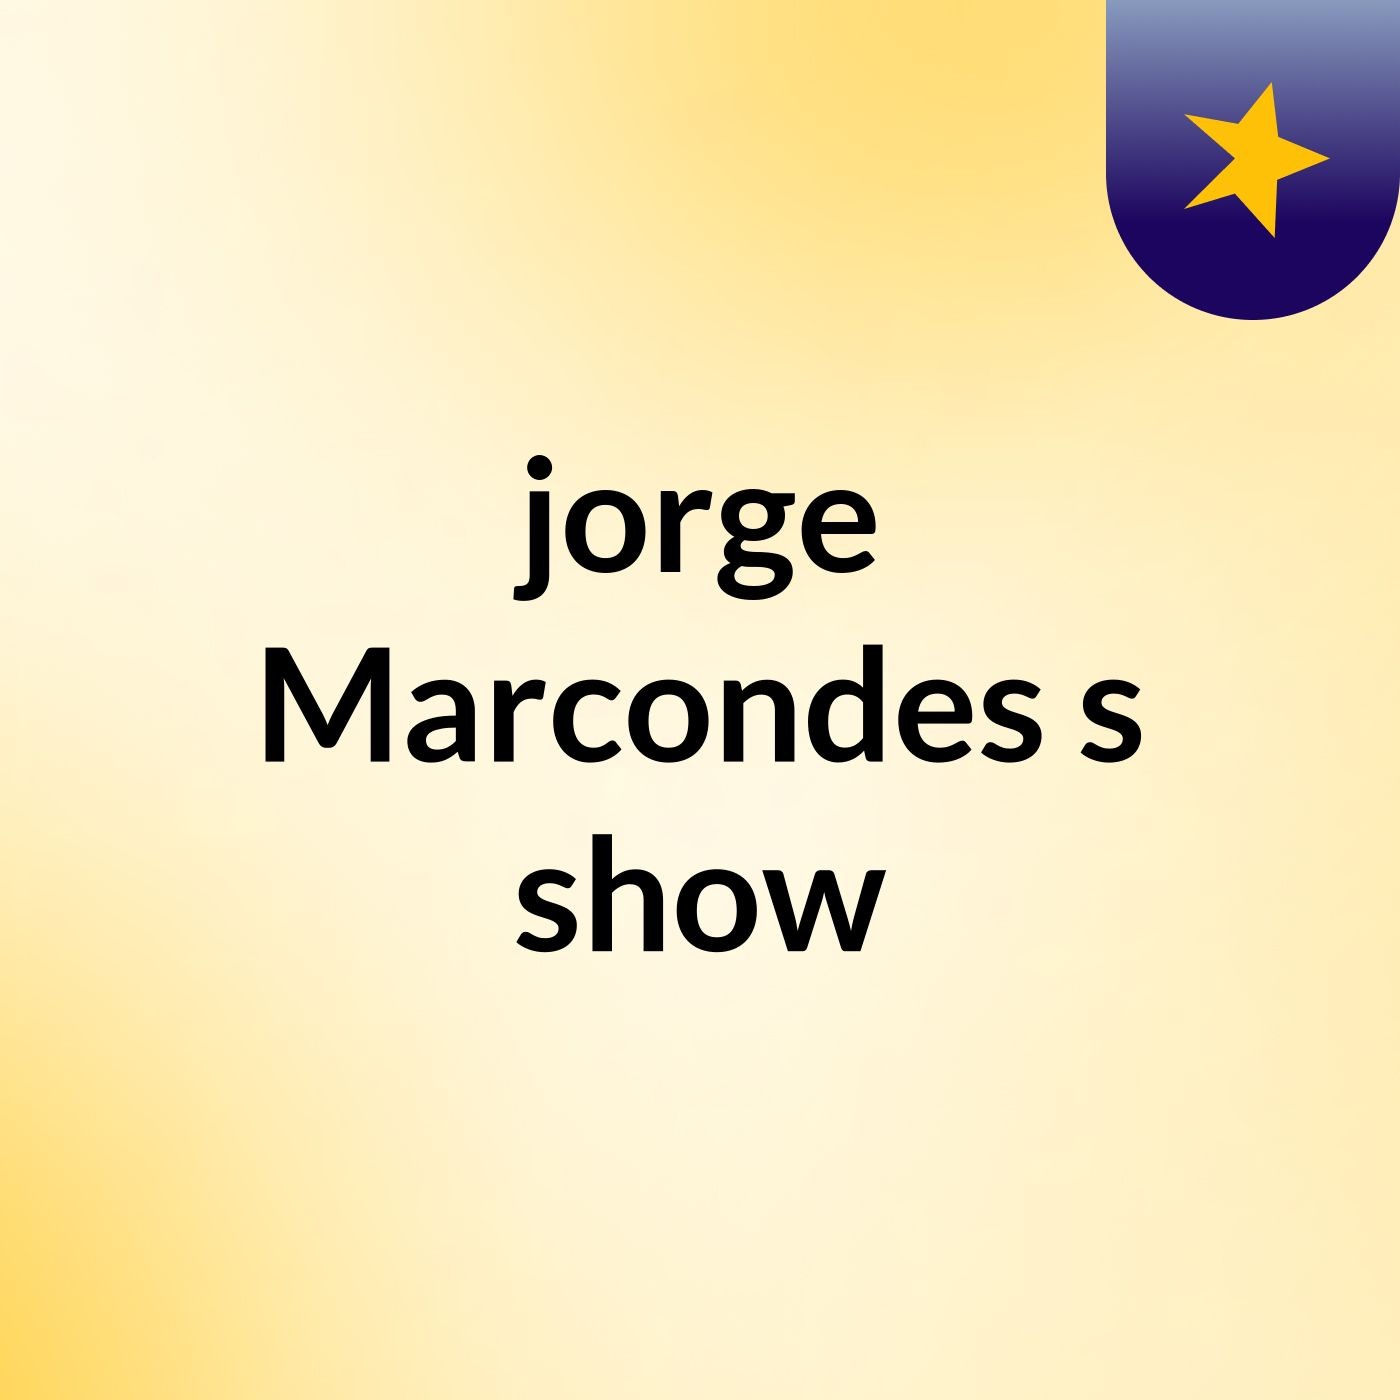 jorge Marcondes's show